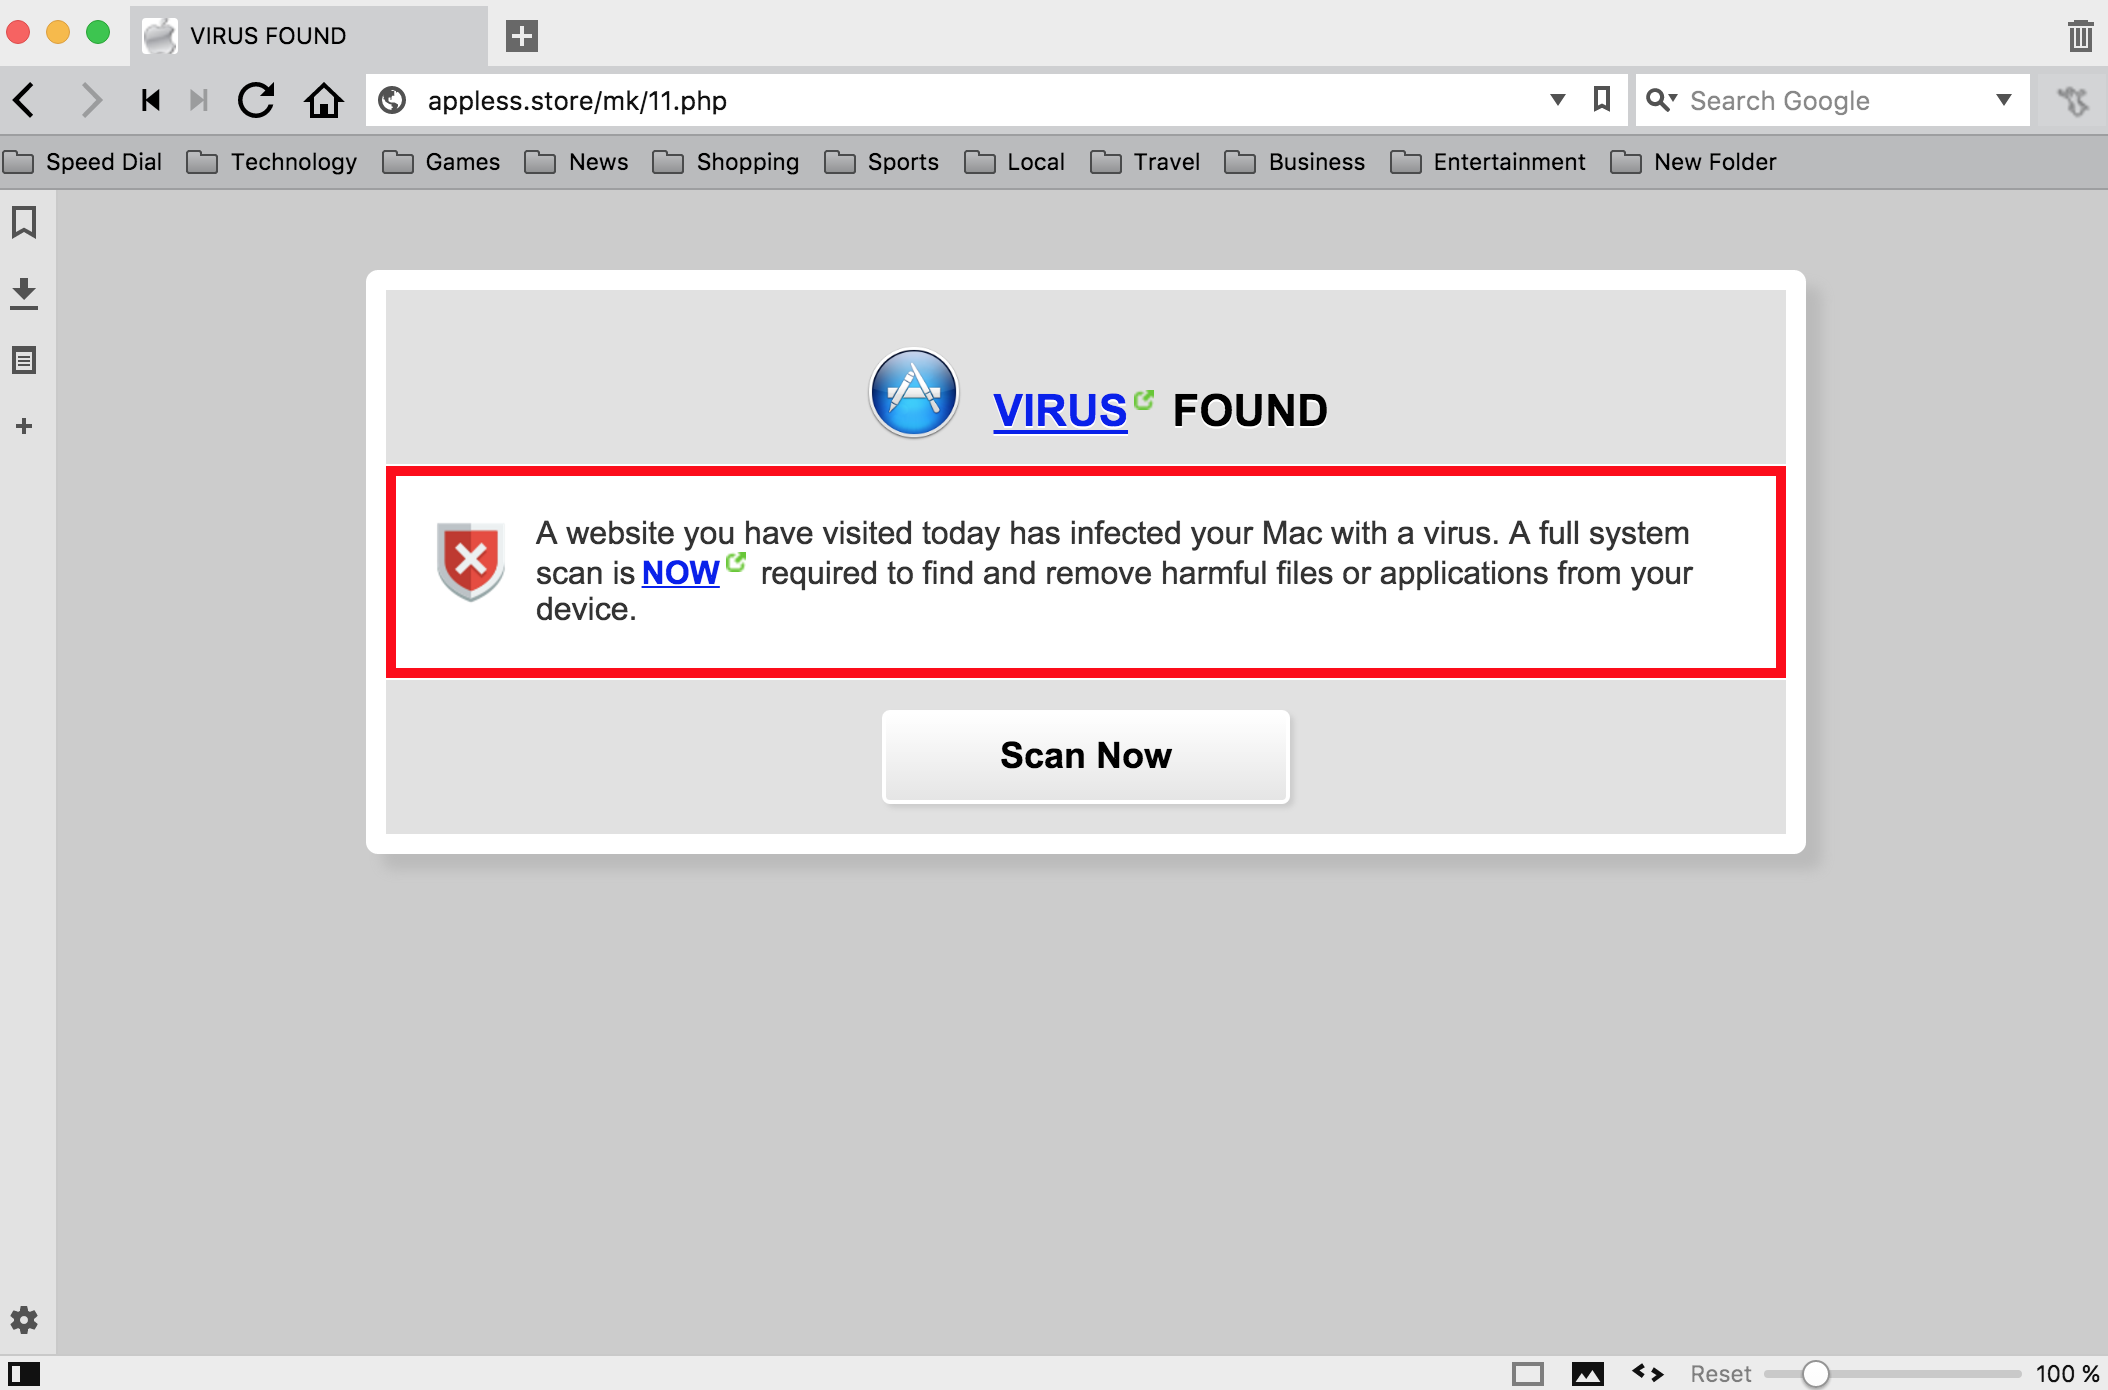 Appless.store Virus Found scam